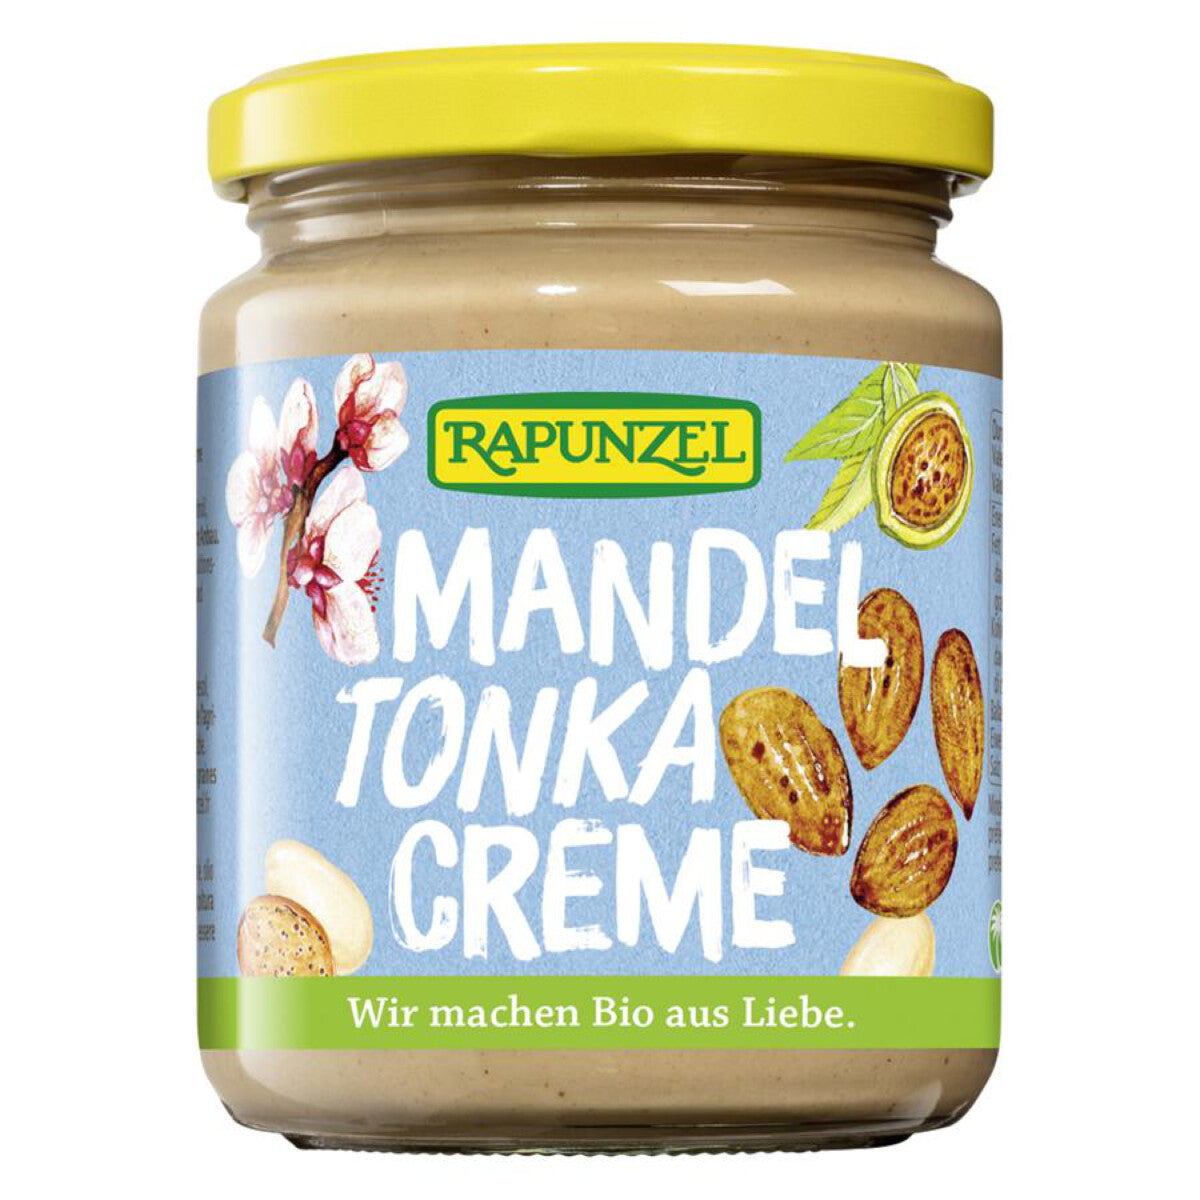 RAPUNZEL Mandel-Tonka-Creme - 250g, 100% kbA